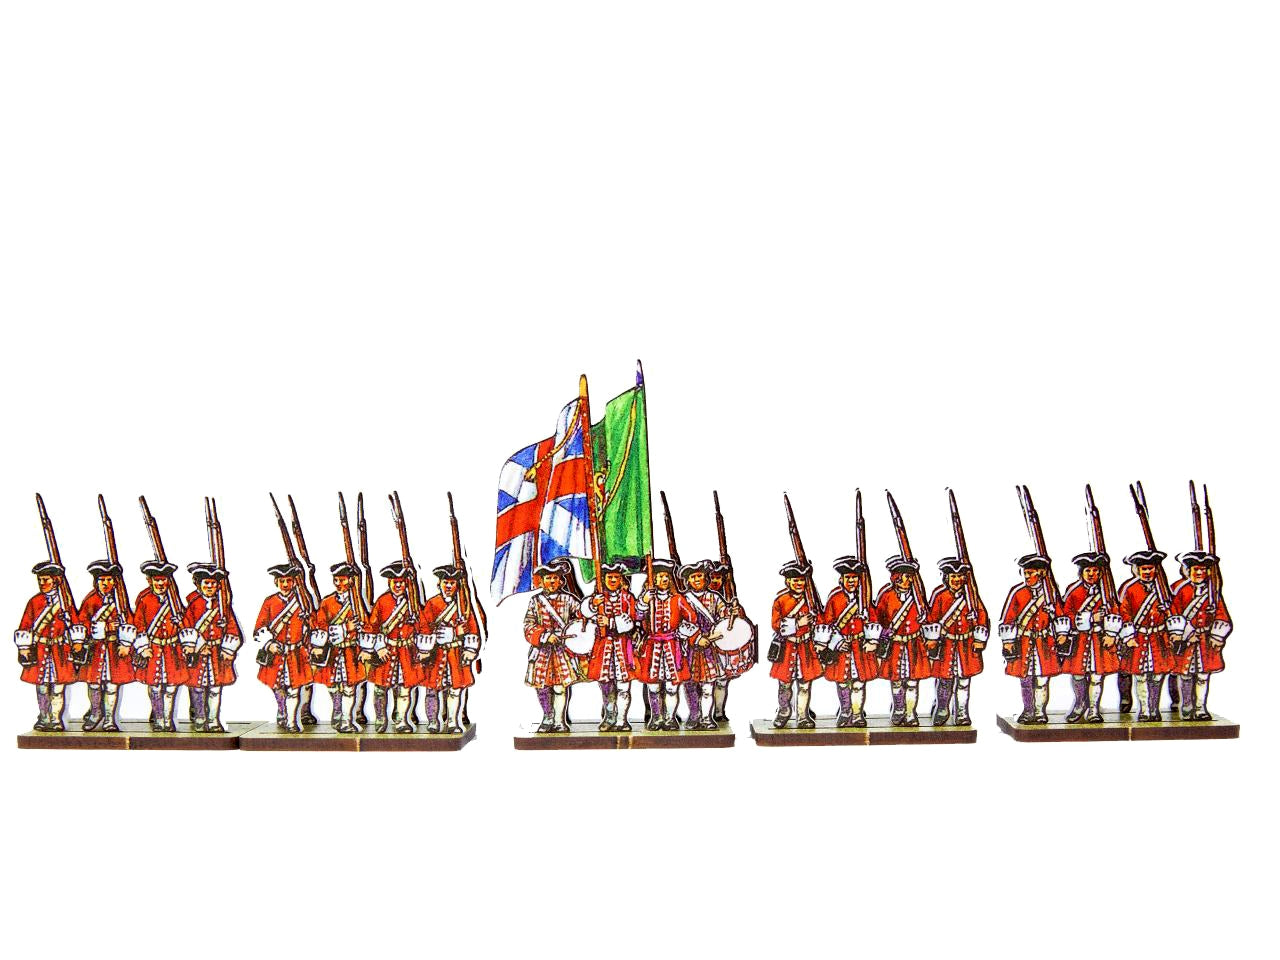 British Line Infantry